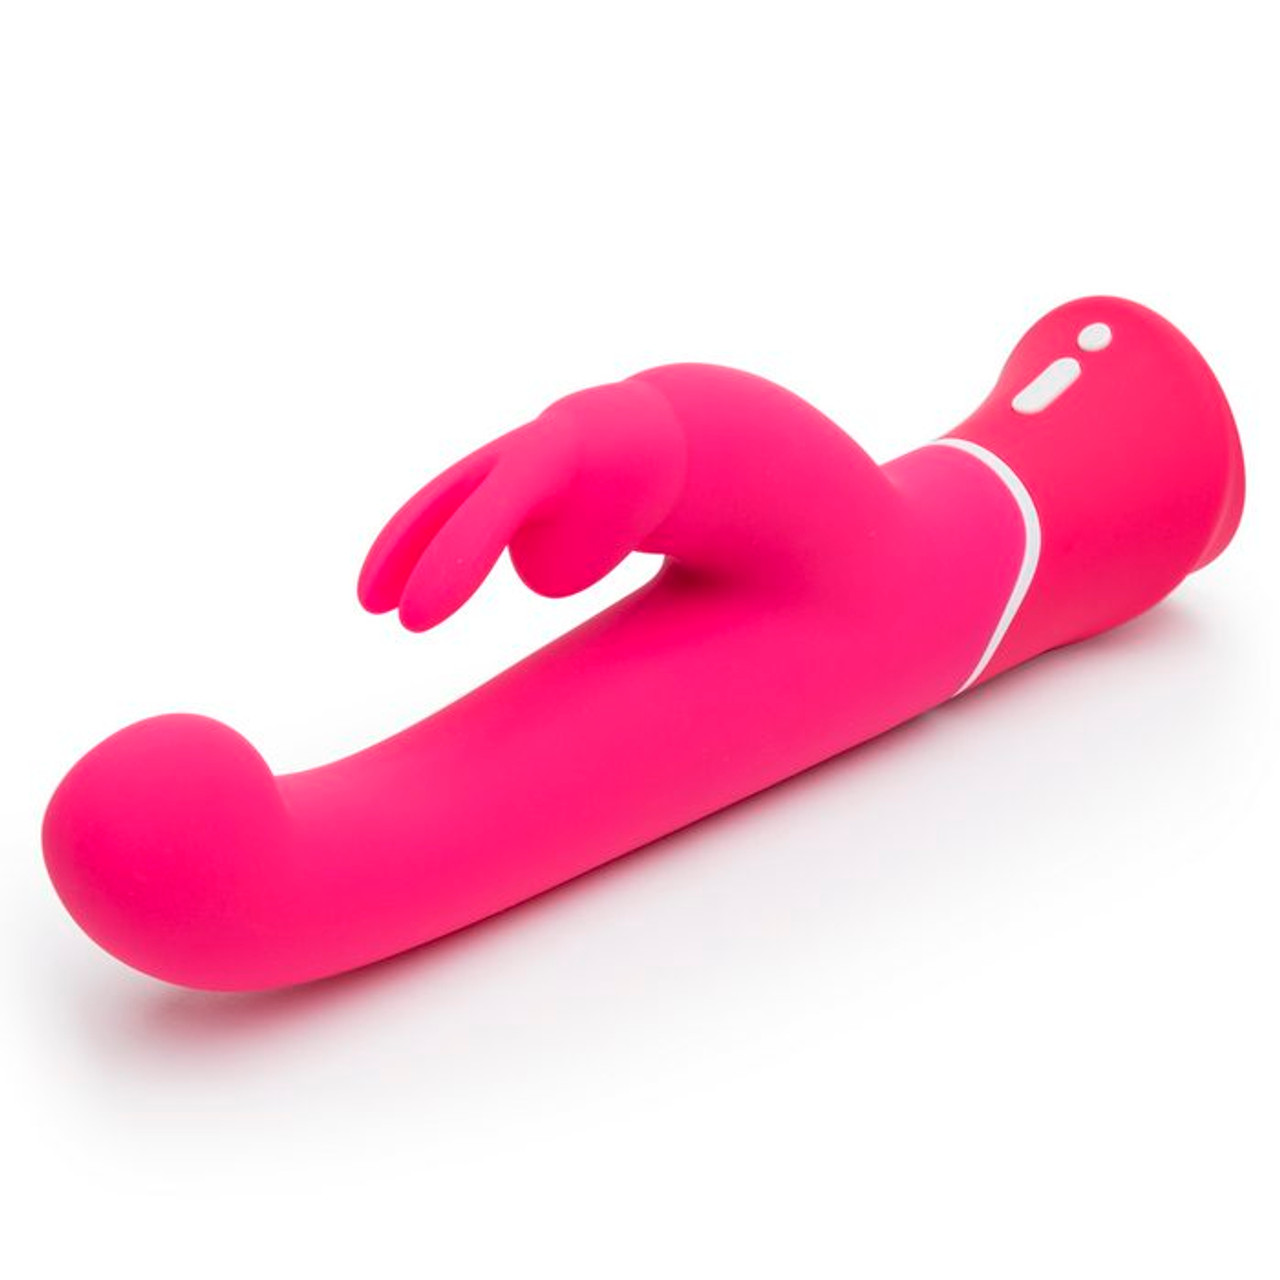 Happy Rabbit 2 G Spot Rabbit Vibrator | Vibrators for Women from Condom Depot